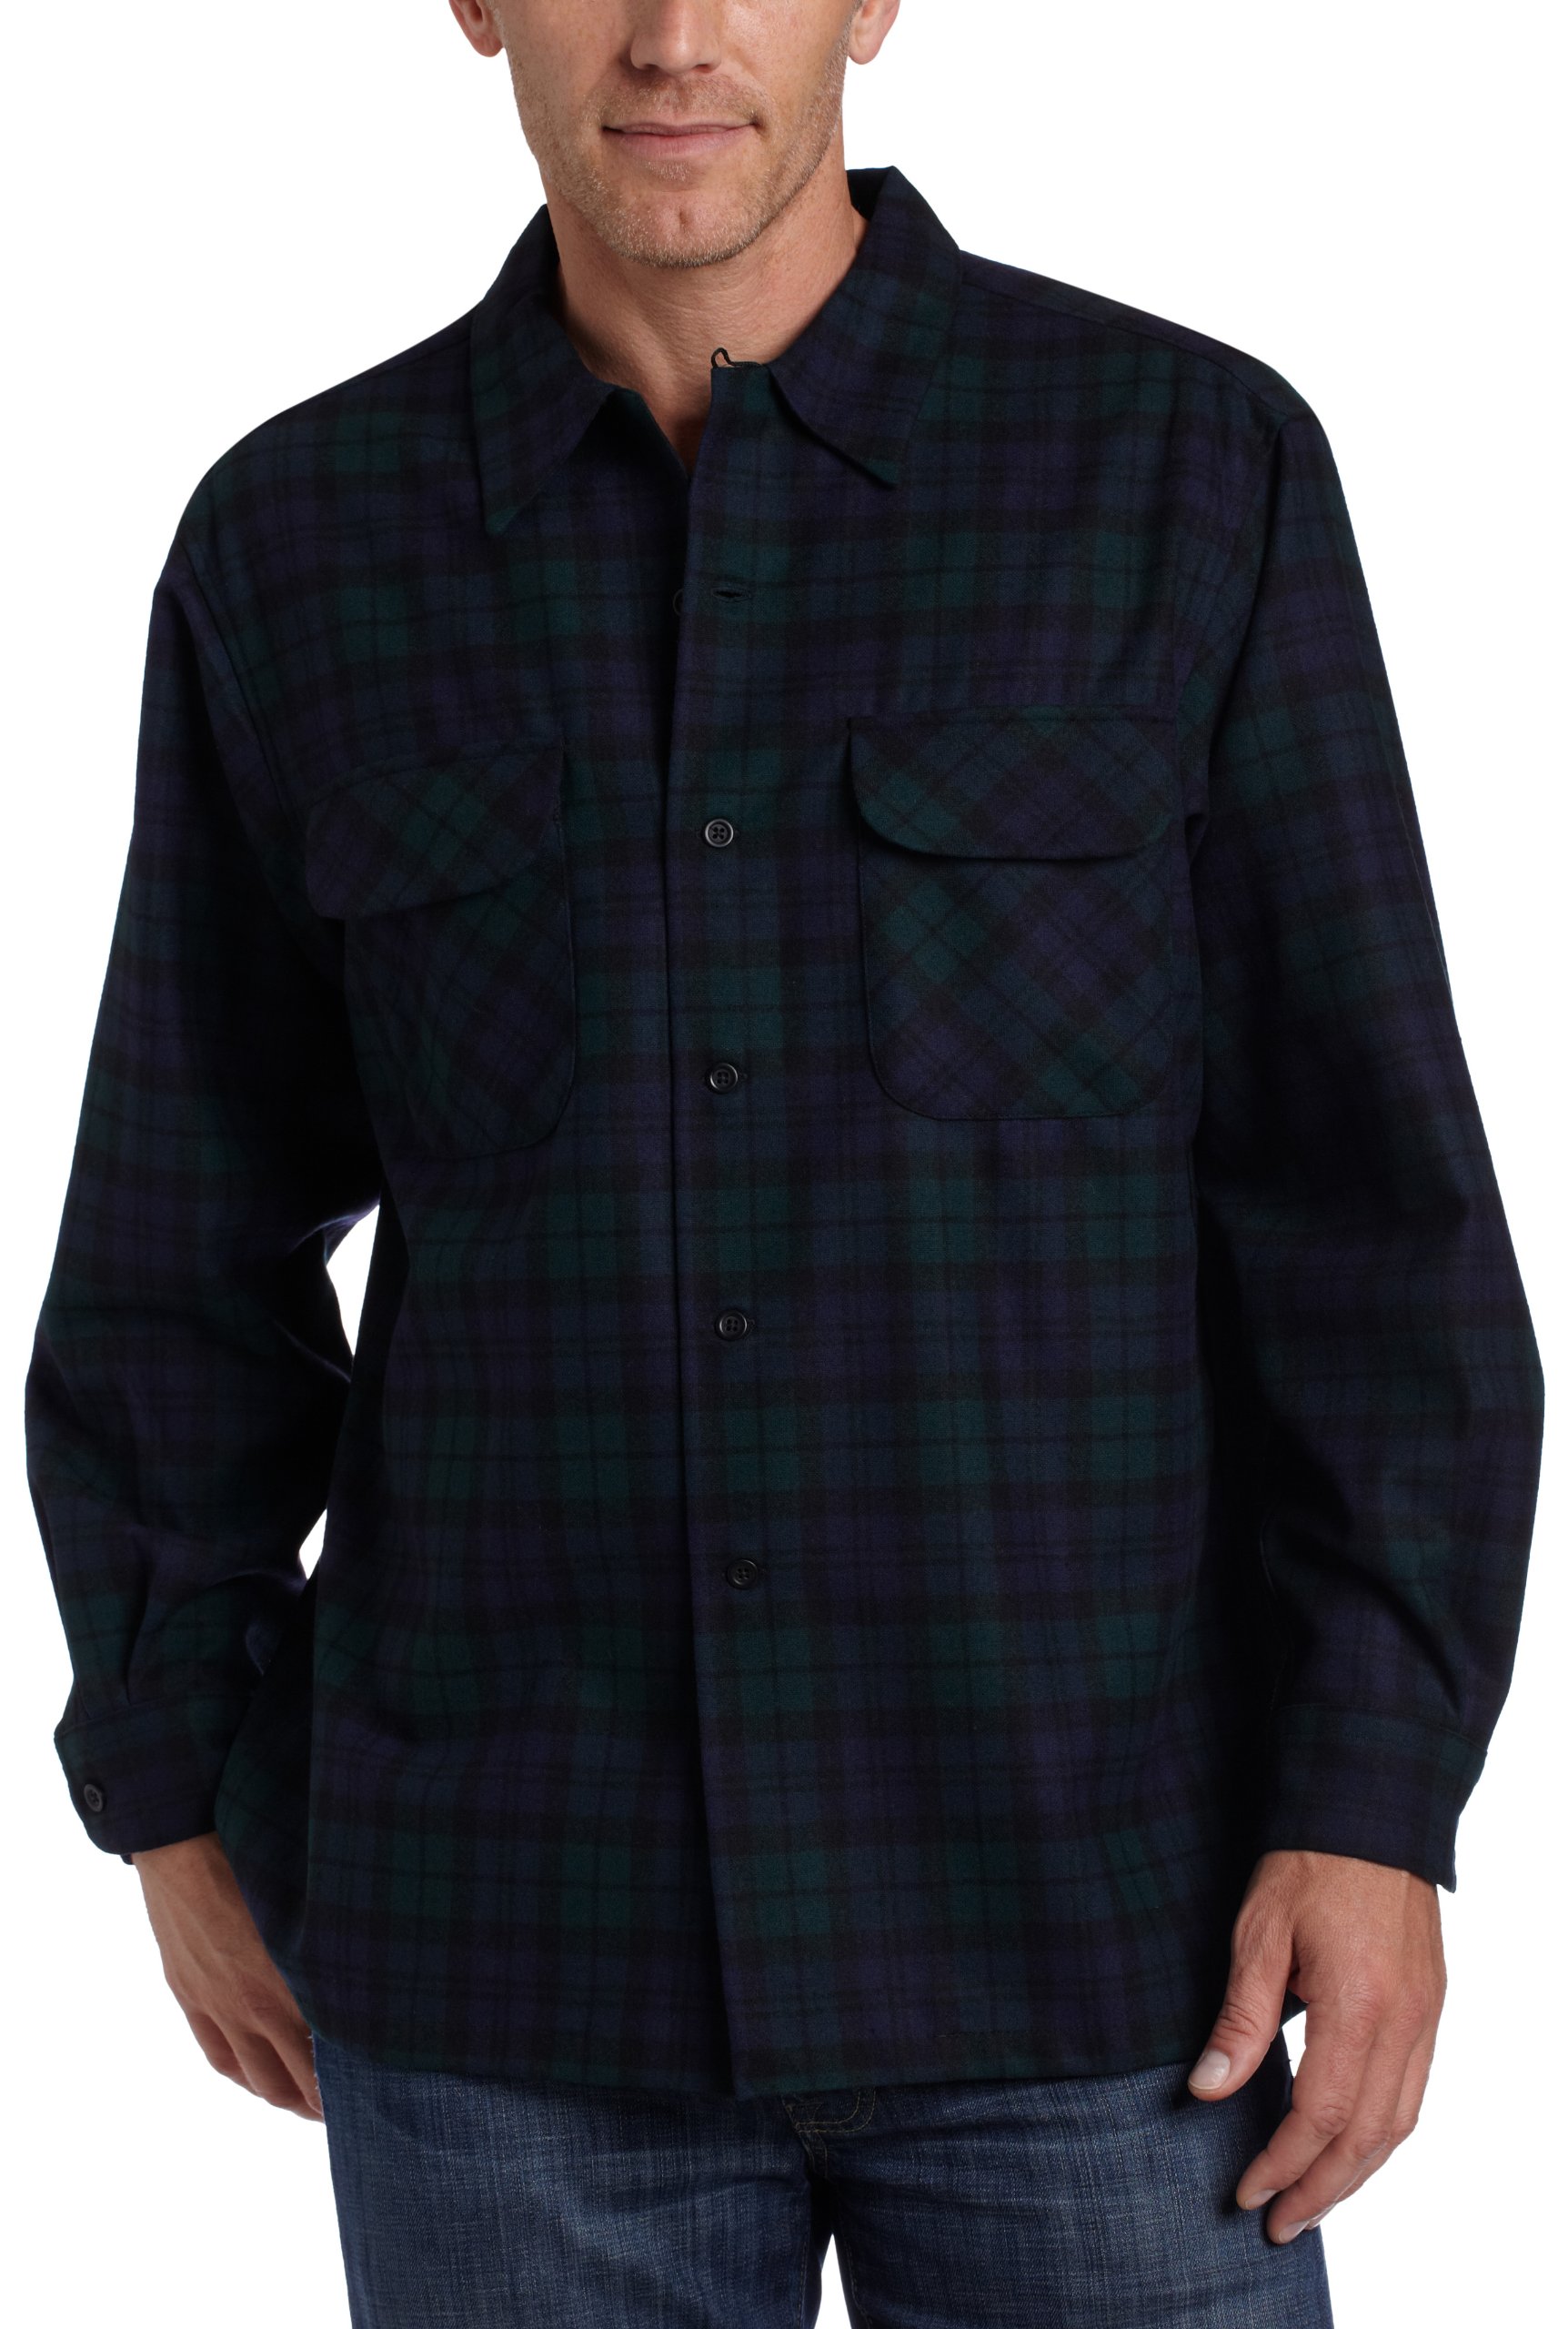 Pendleton, Men's Long Sleeve Classic-fit Board Shirt